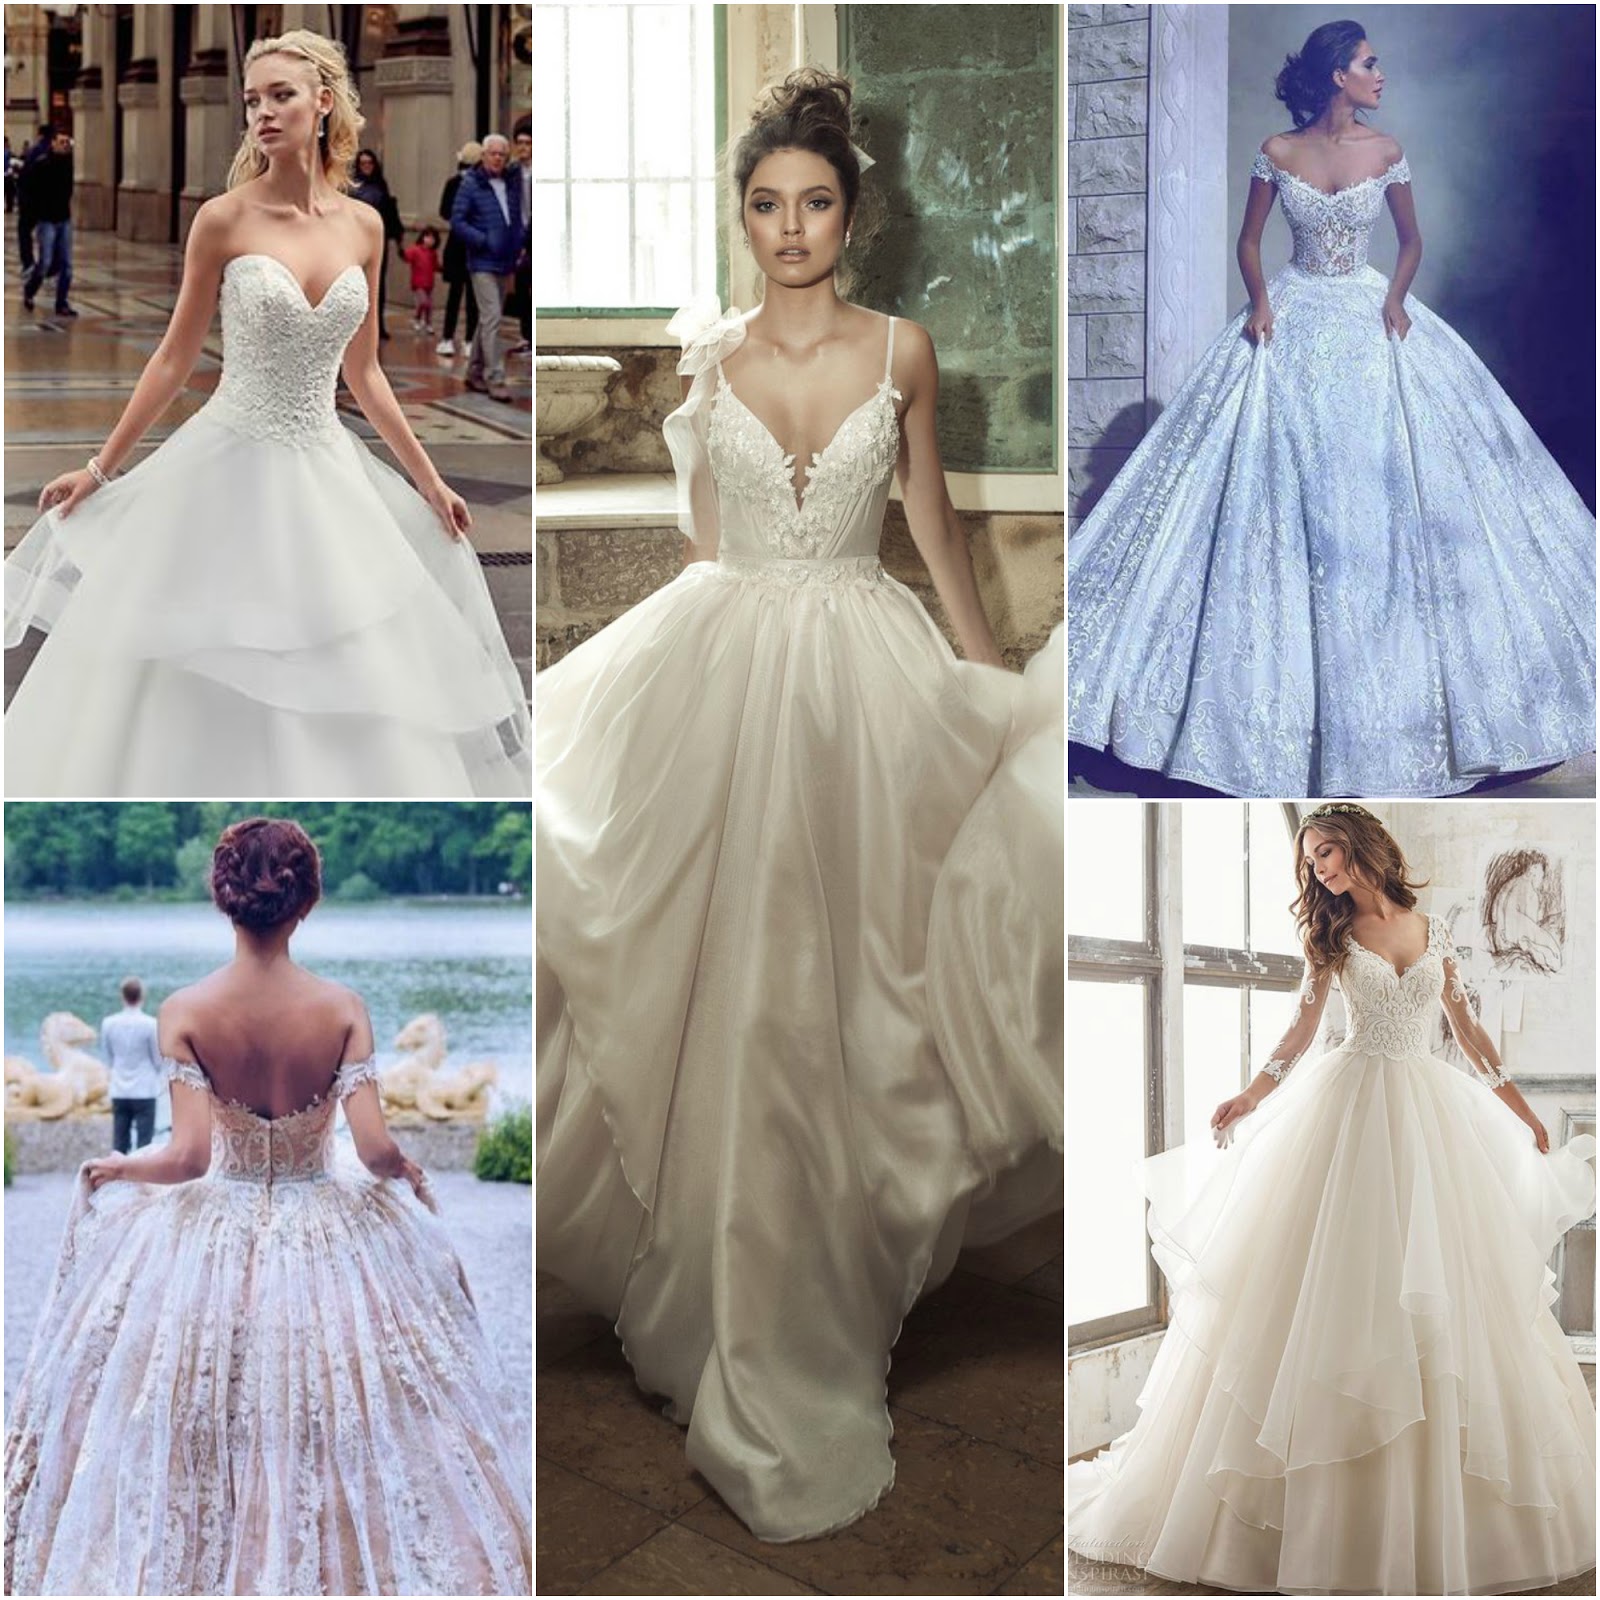 Modelos de vestido de noiva com corte de princesa